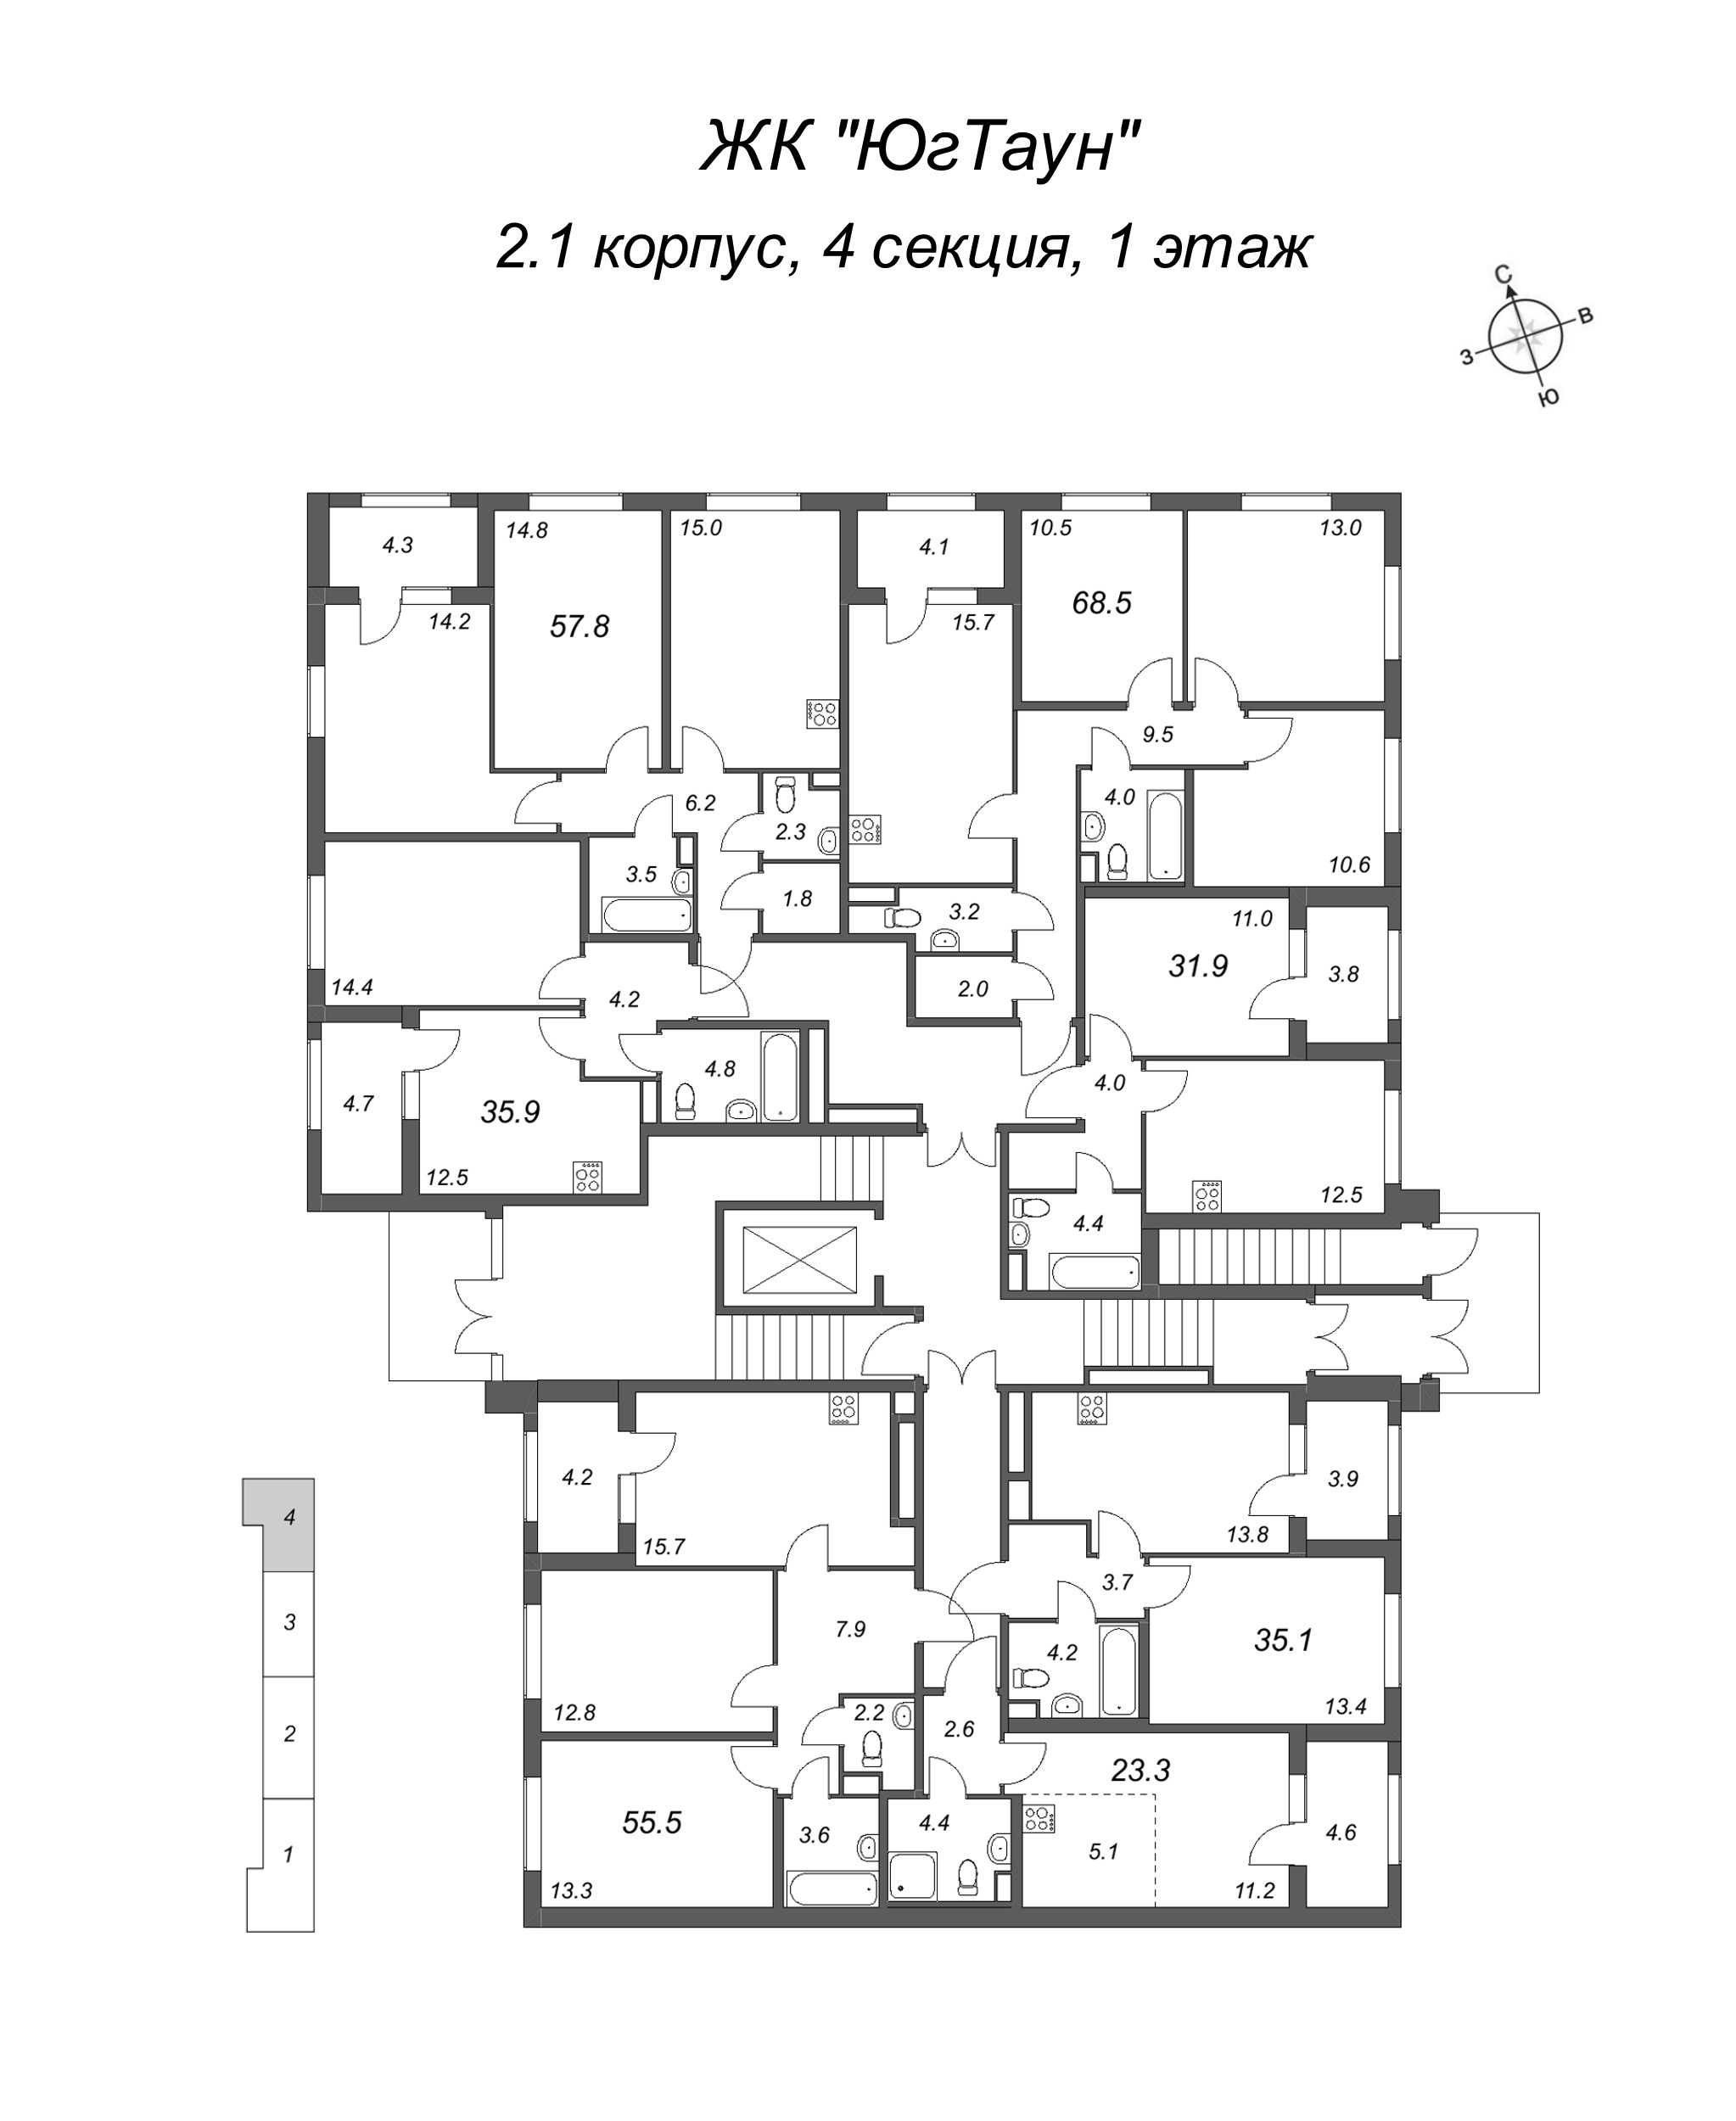 3-комнатная (Евро) квартира, 55.5 м² - планировка этажа